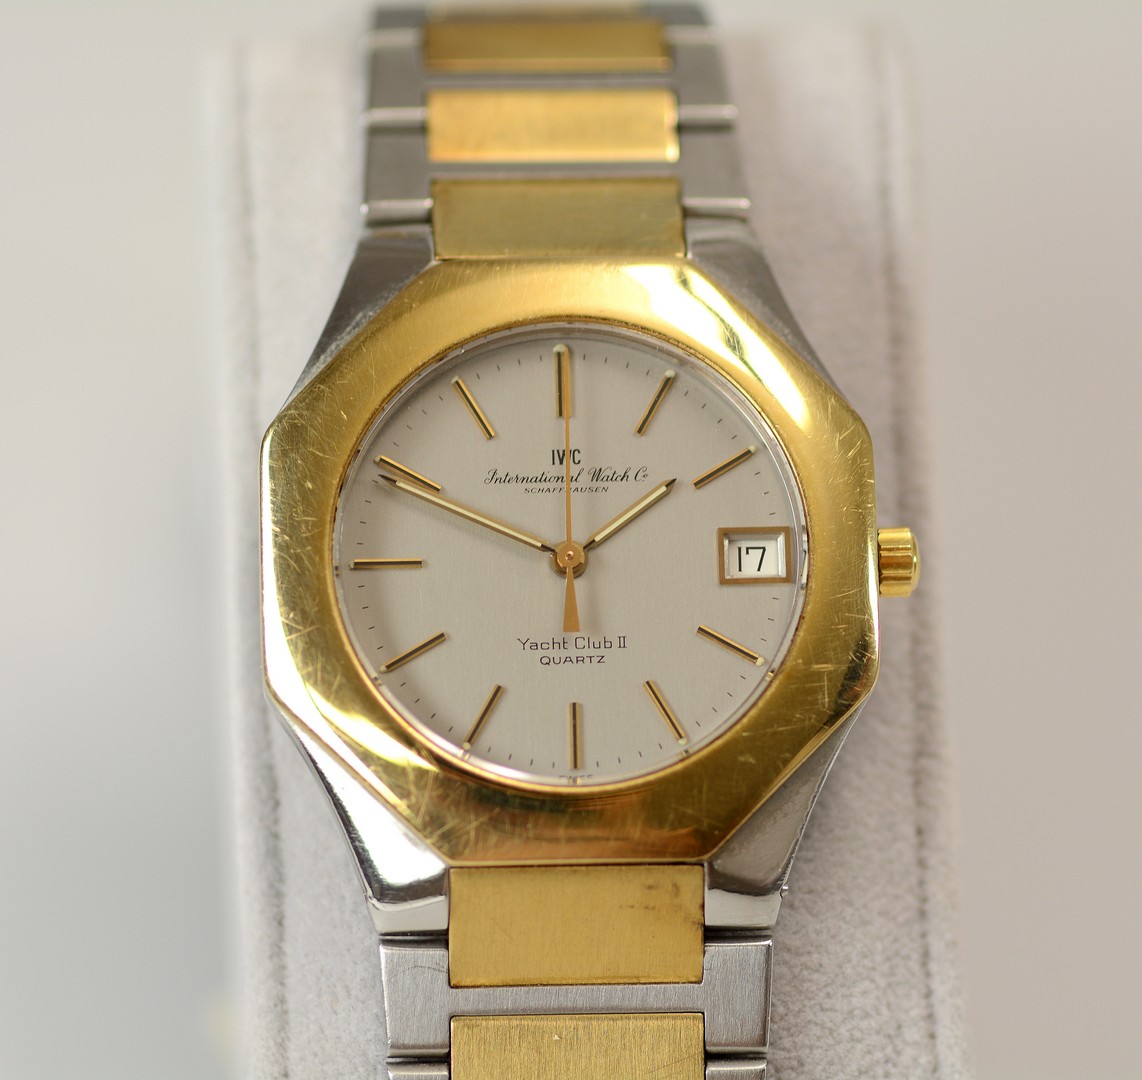 IWC / Yatch Club II - Gentlemen's Gold/Steel Wristwatch - Image 6 of 6